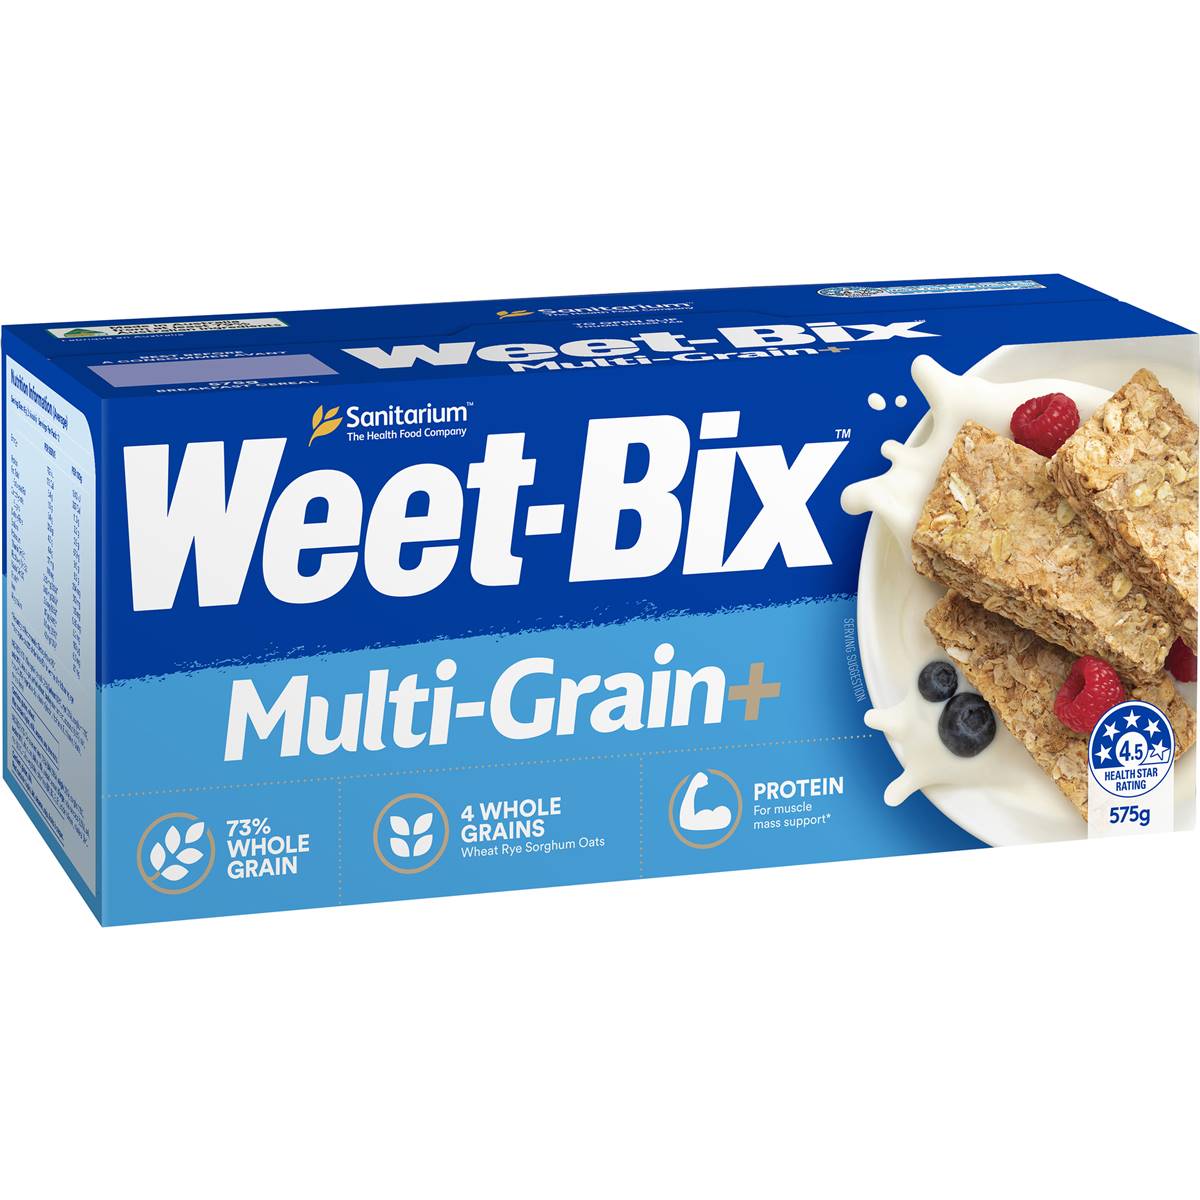 Calories in Sanitarium Weet-bix Blends Multi-grain+ Breakfast Cereal